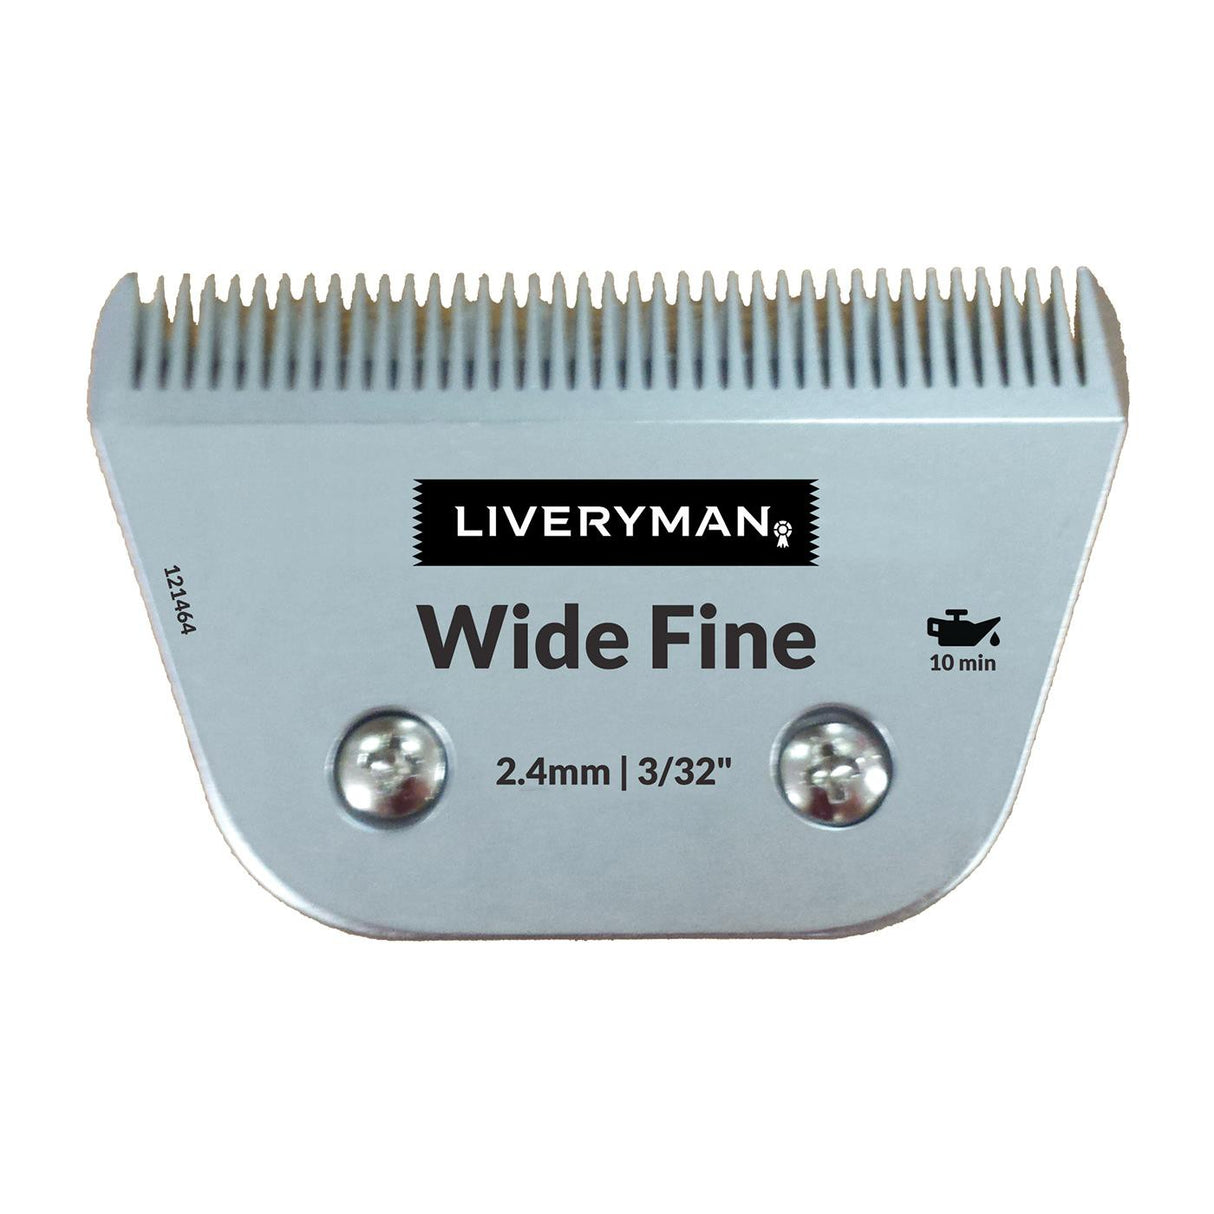 Liveryman Cutter & Comb Wide Fine T84/2.4 mm Blade